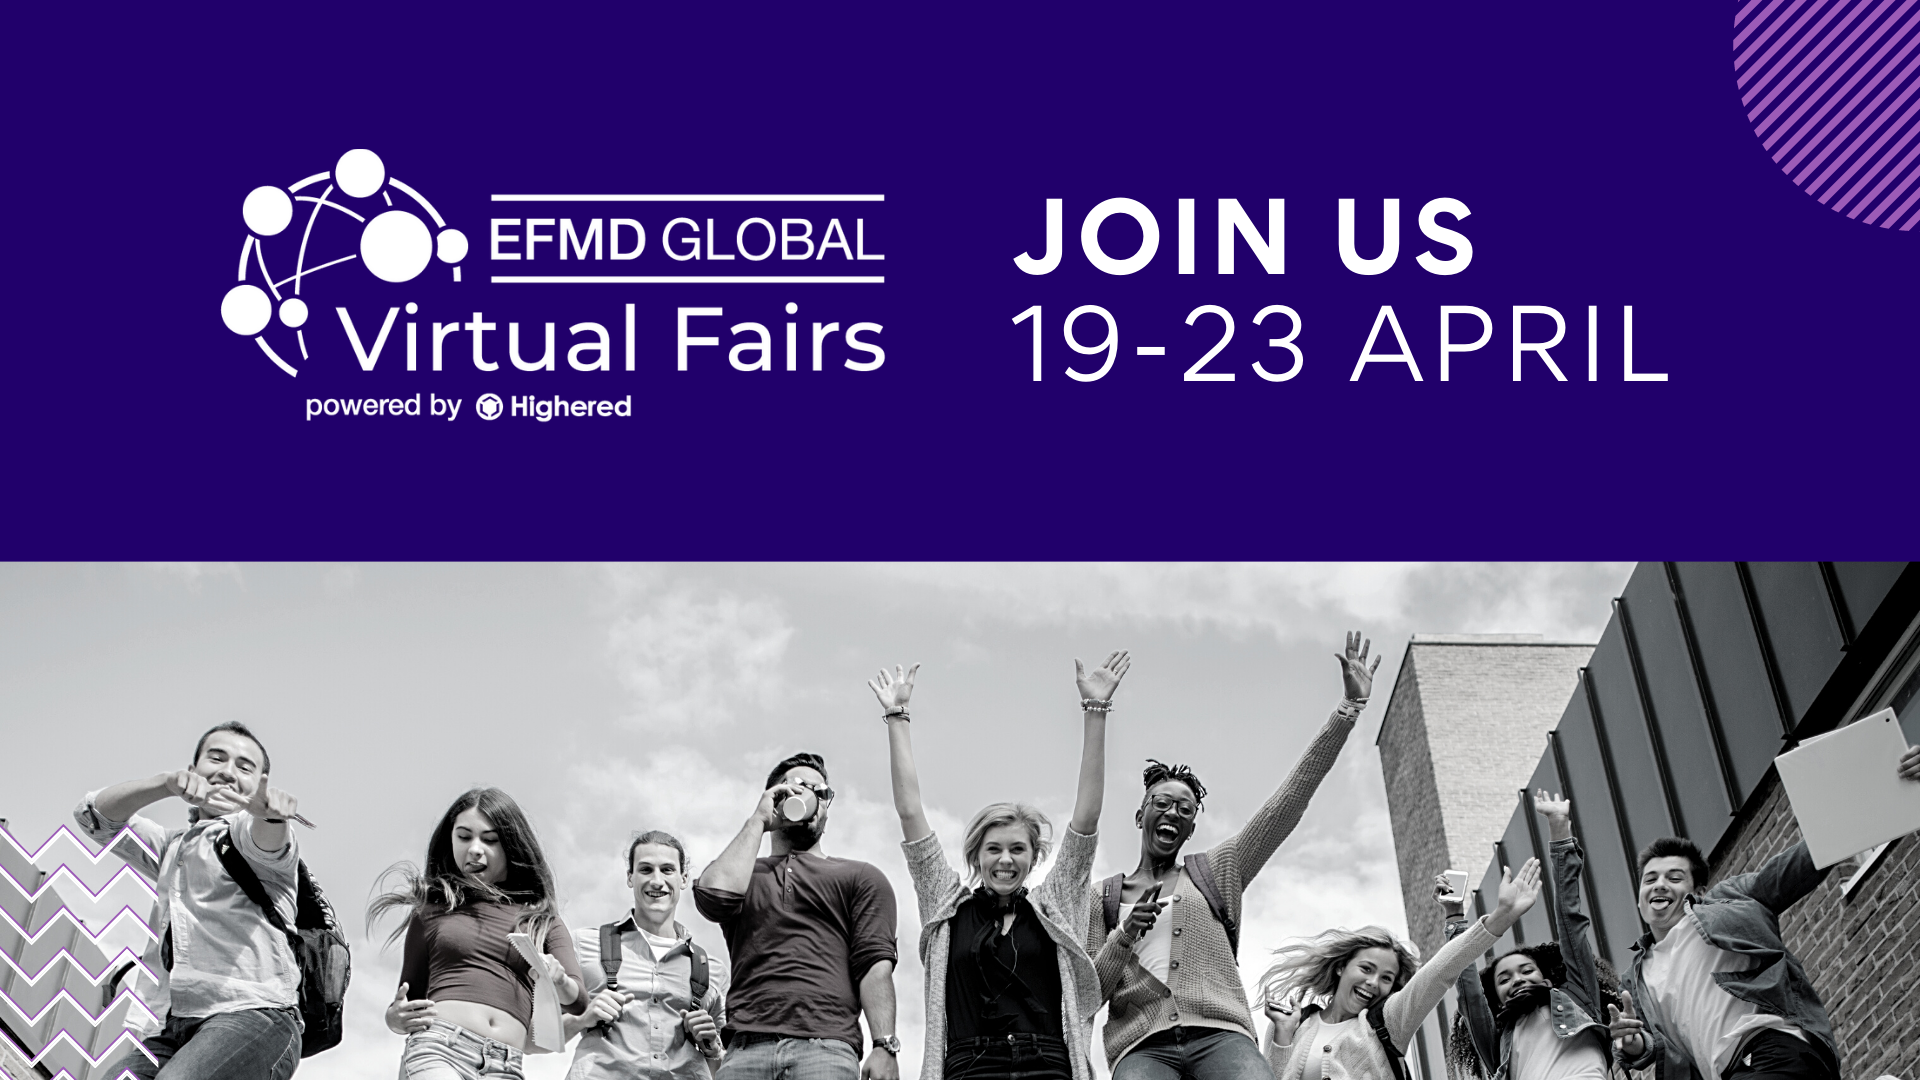 EFMD Global Virtual Fair